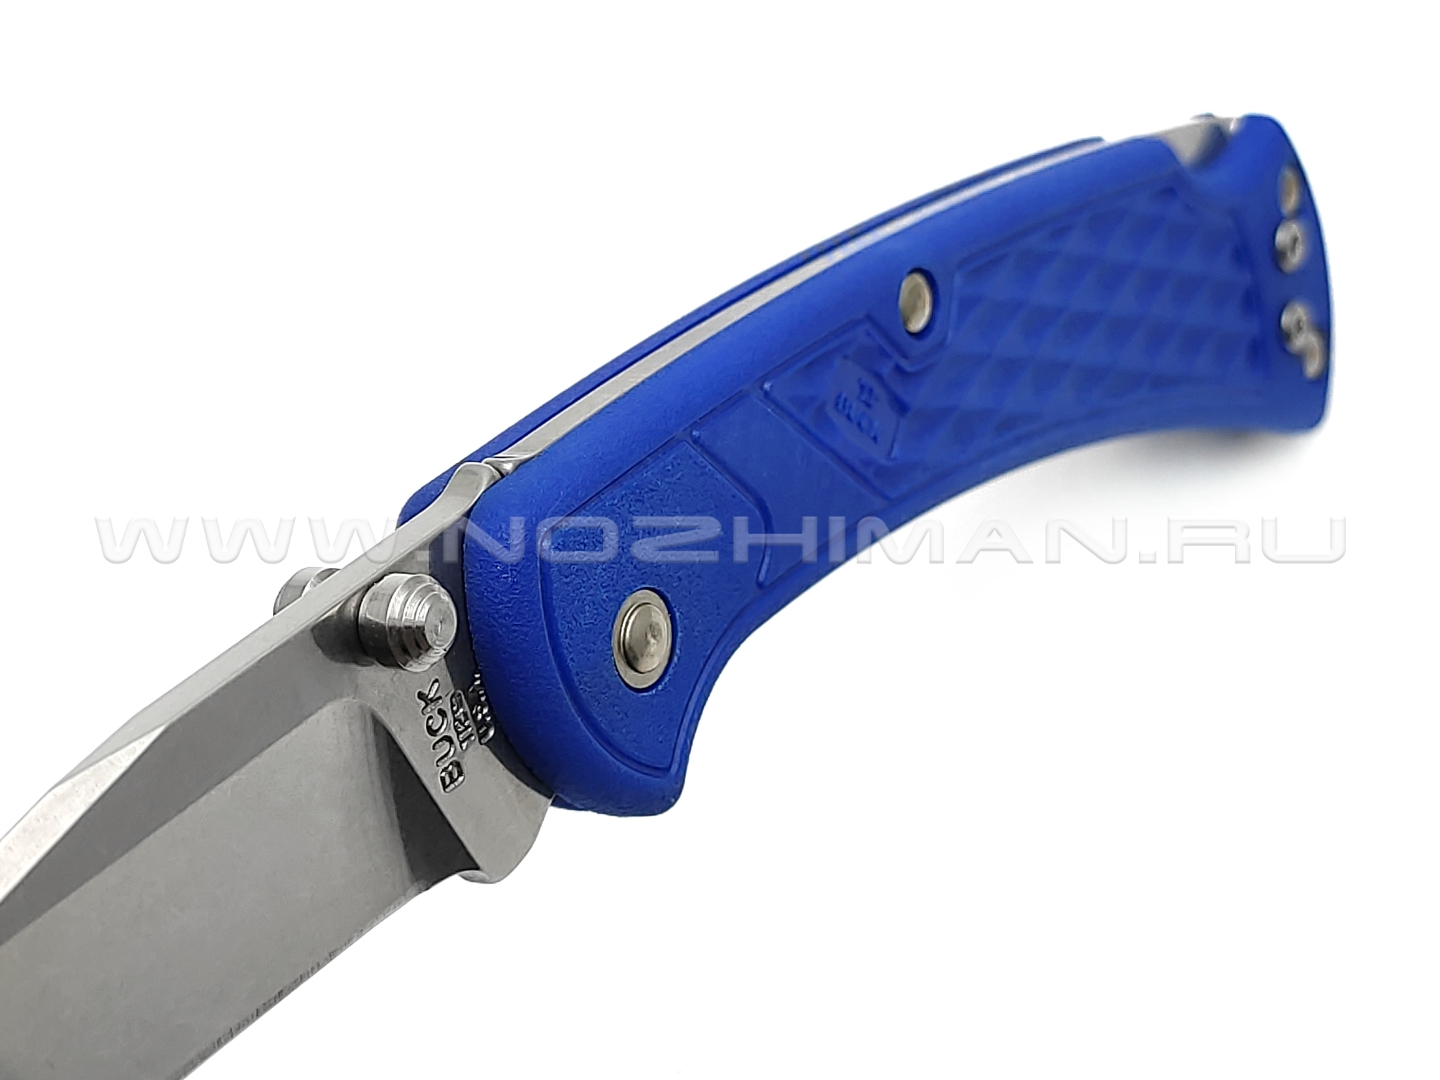 Нож Buck 112 Slim Select Blue 0112BLS2 сталь 420HC рукоять GFN